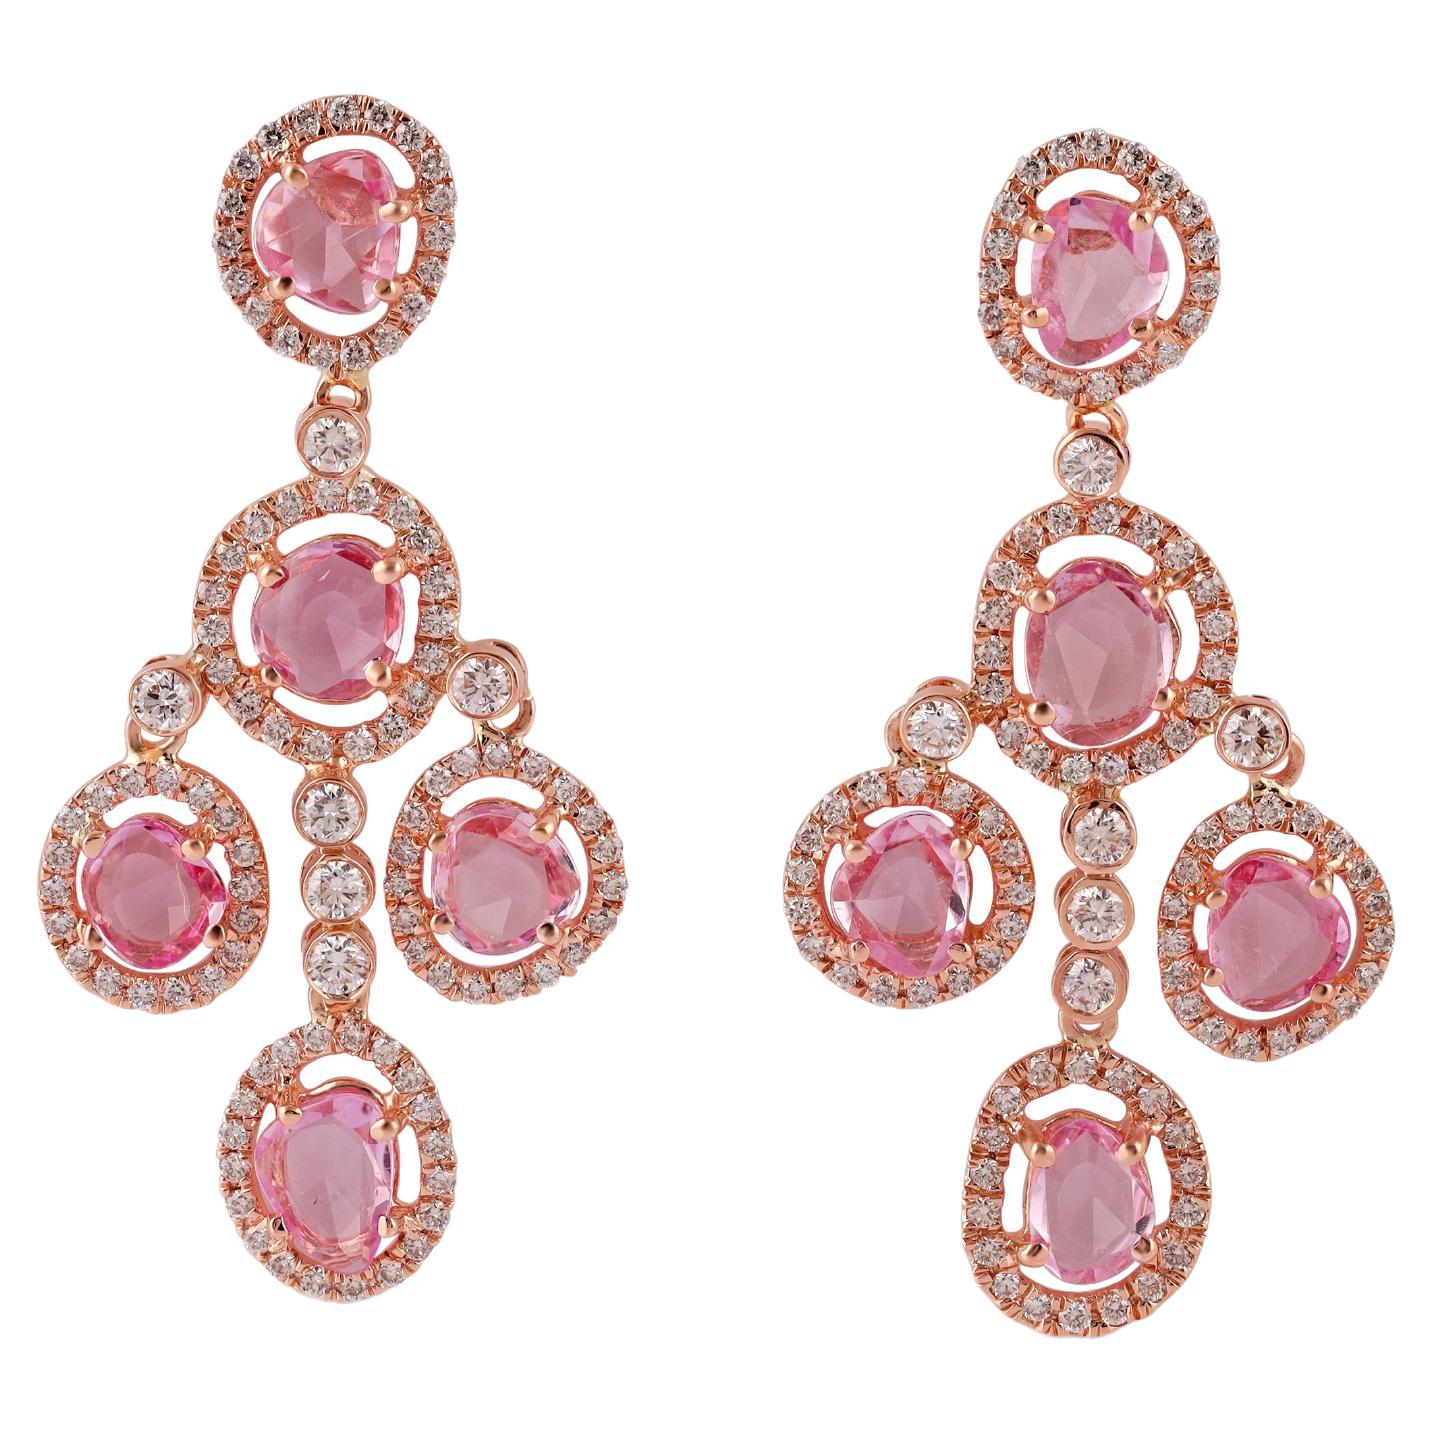 4.23 Carat Pink Sapphire & Diamond Earrings Studded in 18 Karat Rose Gold For Sale